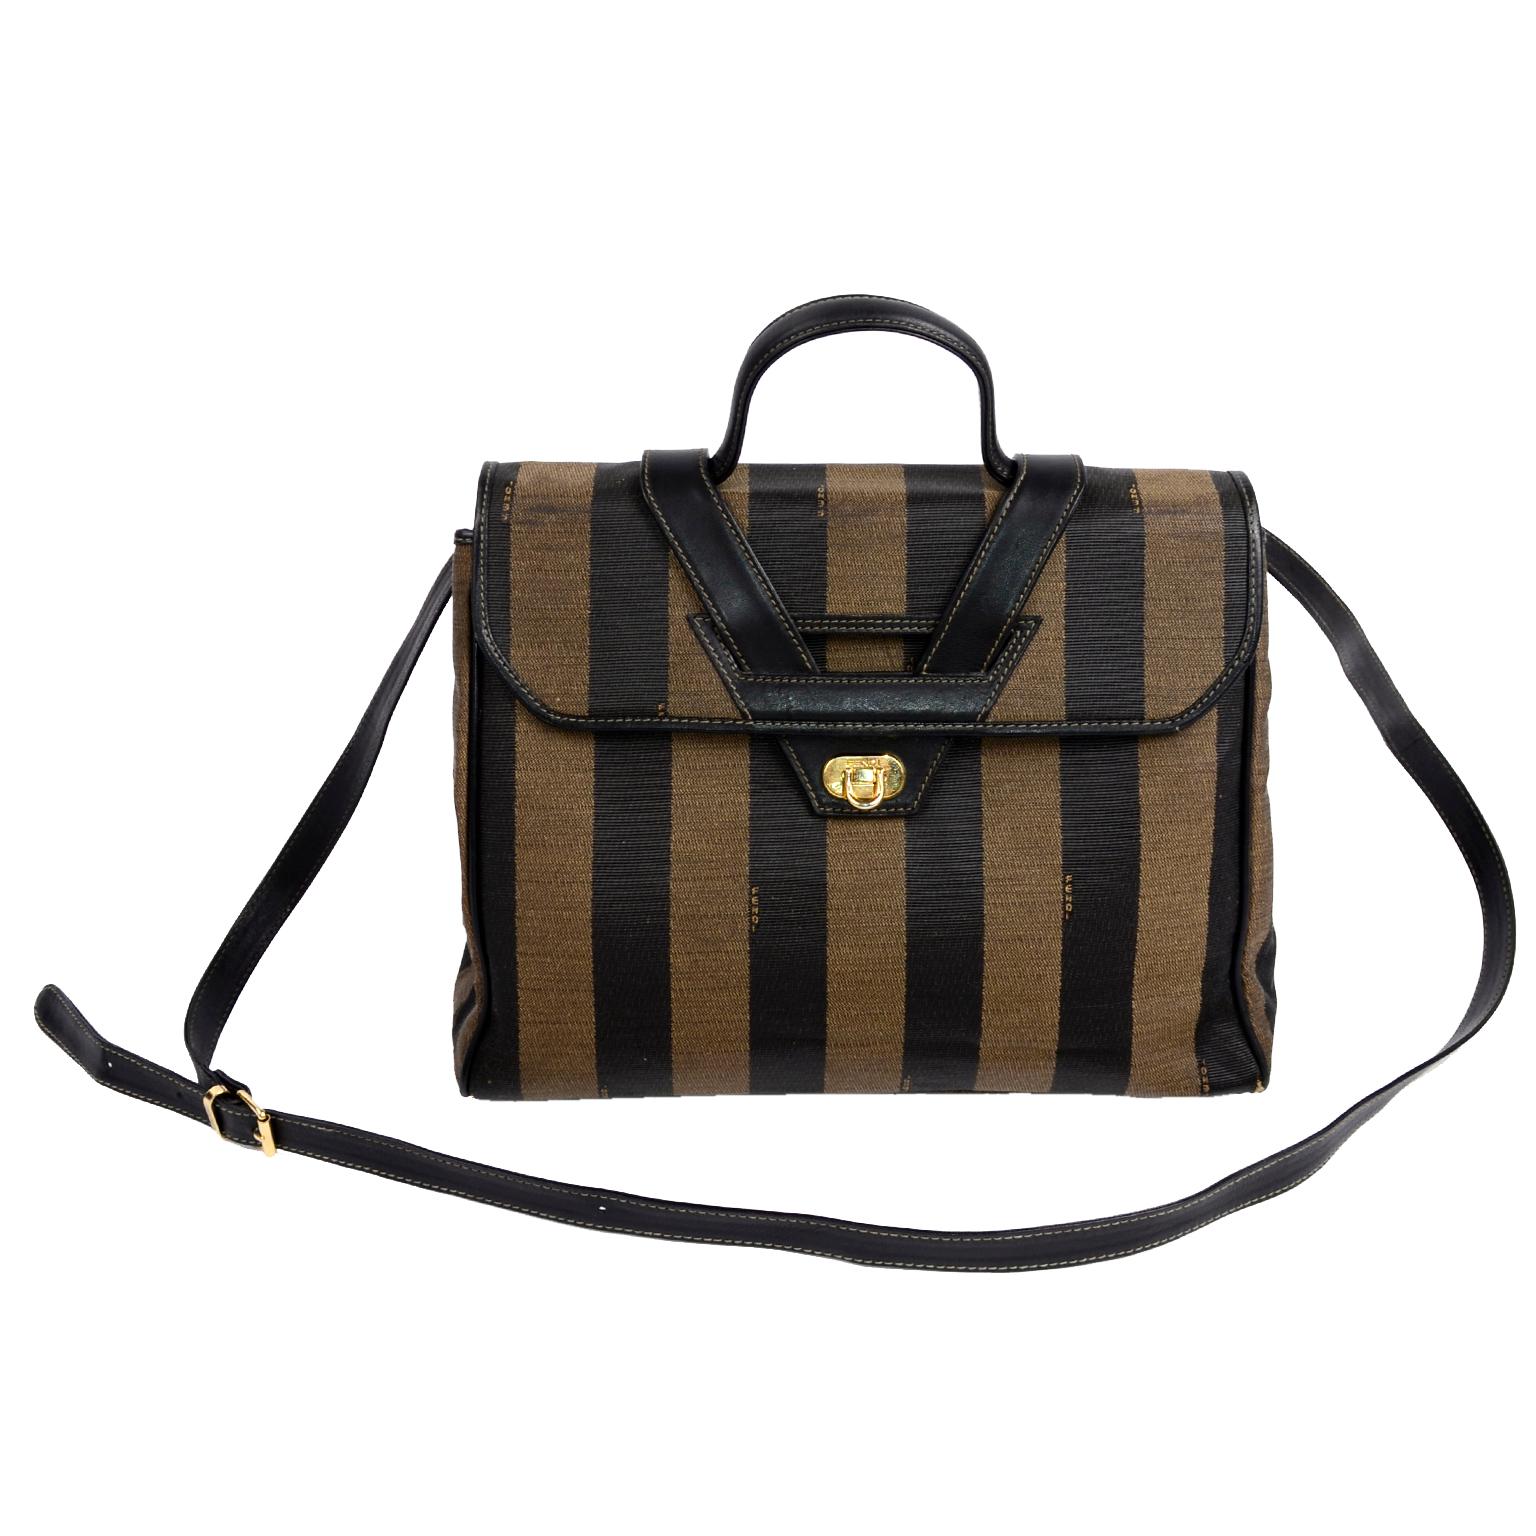 We love this fabulous Fendi Monogram Stripe bag with a top handle and optional shoulder straps.  This wonderful handbag measures 12